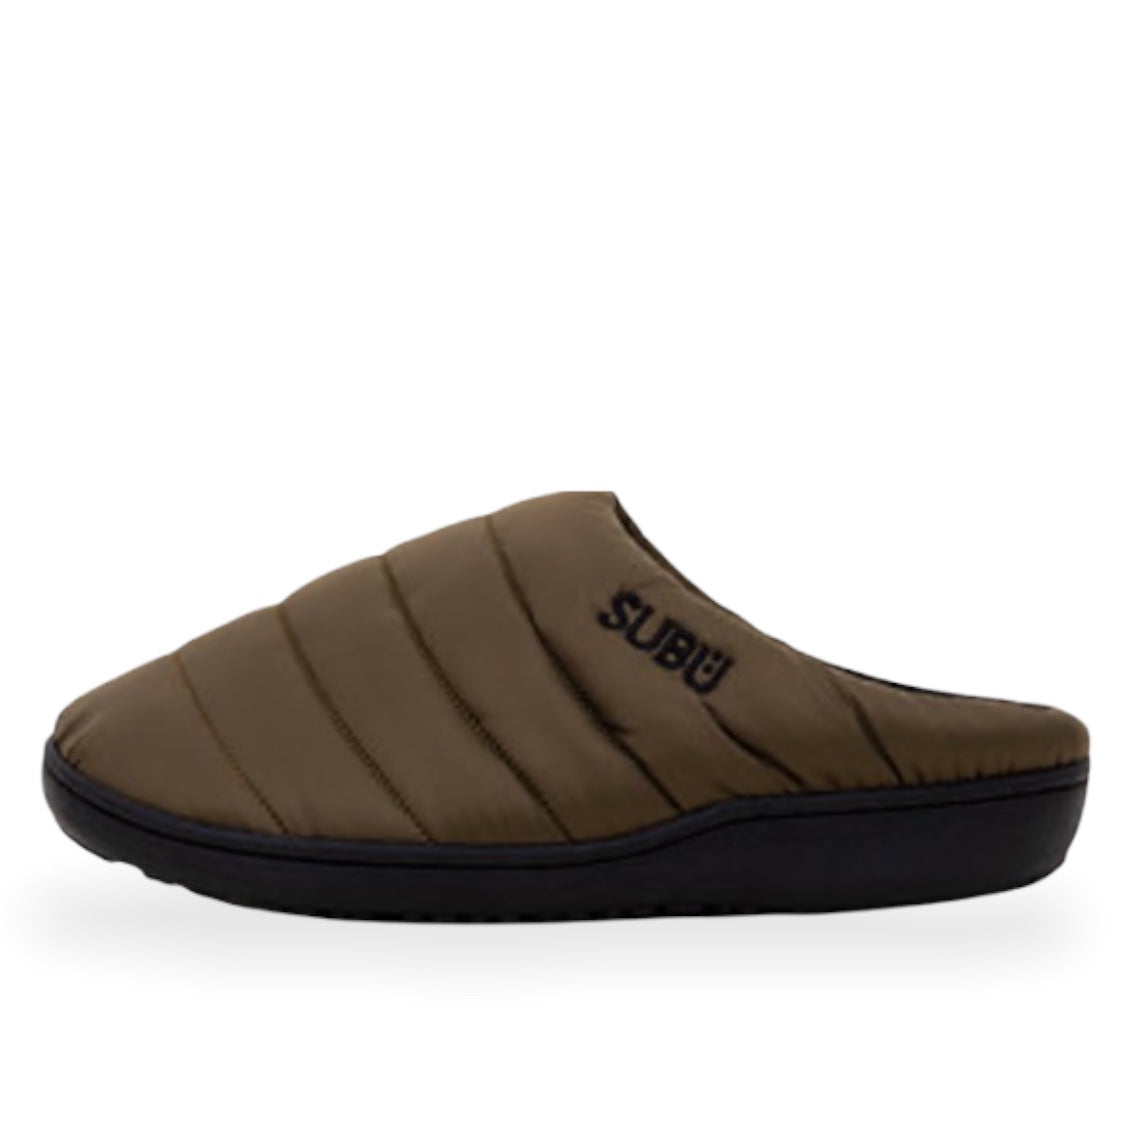 Subu - Subu Sandals (Mountain Khaki)